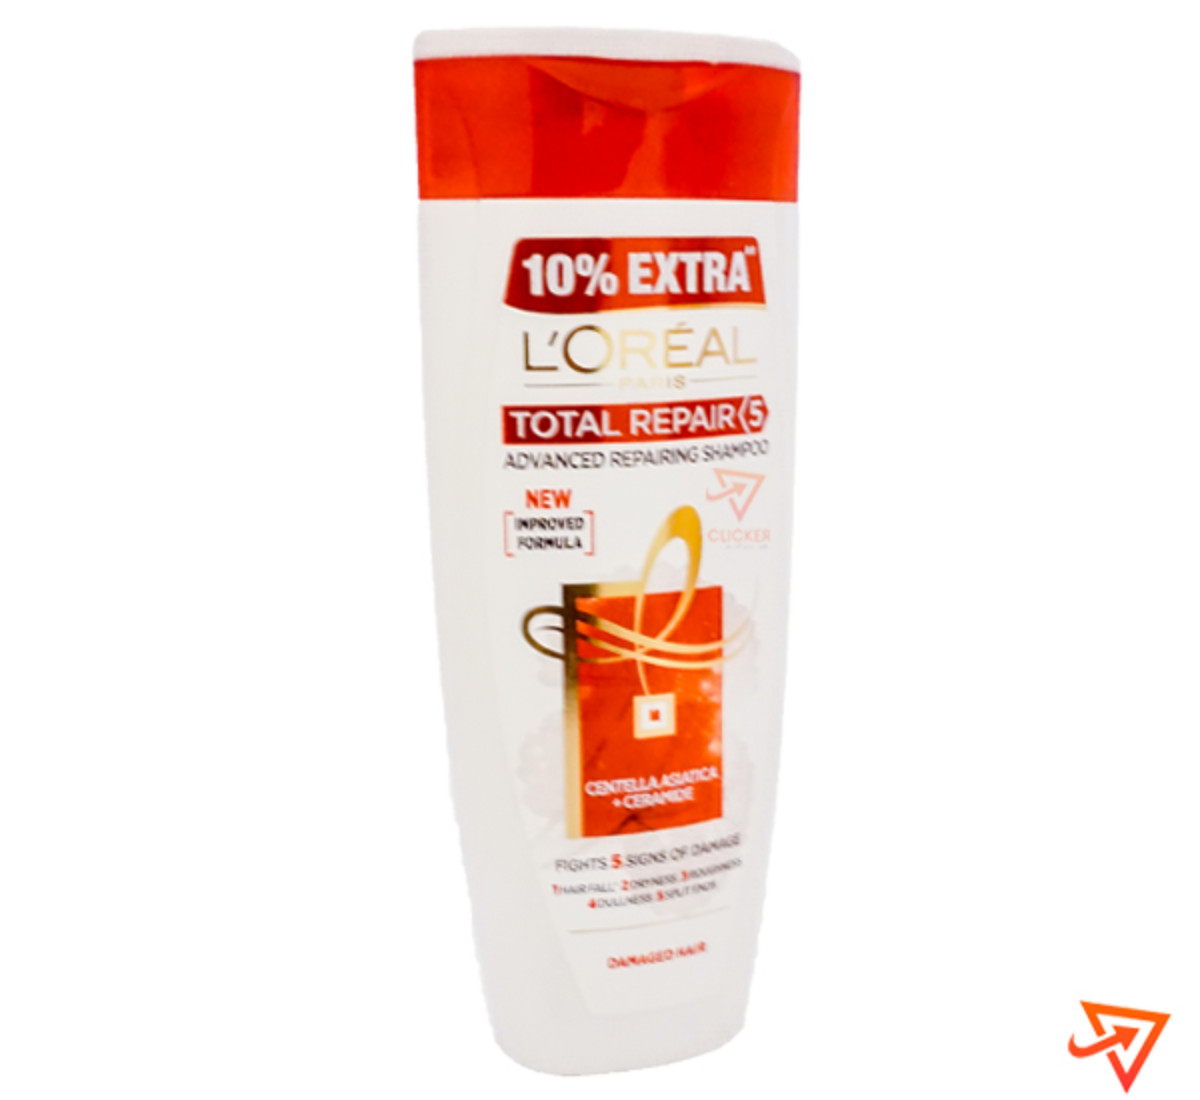 Clicker product 175ml LOREAL paris advanced repairing shampoo 1052